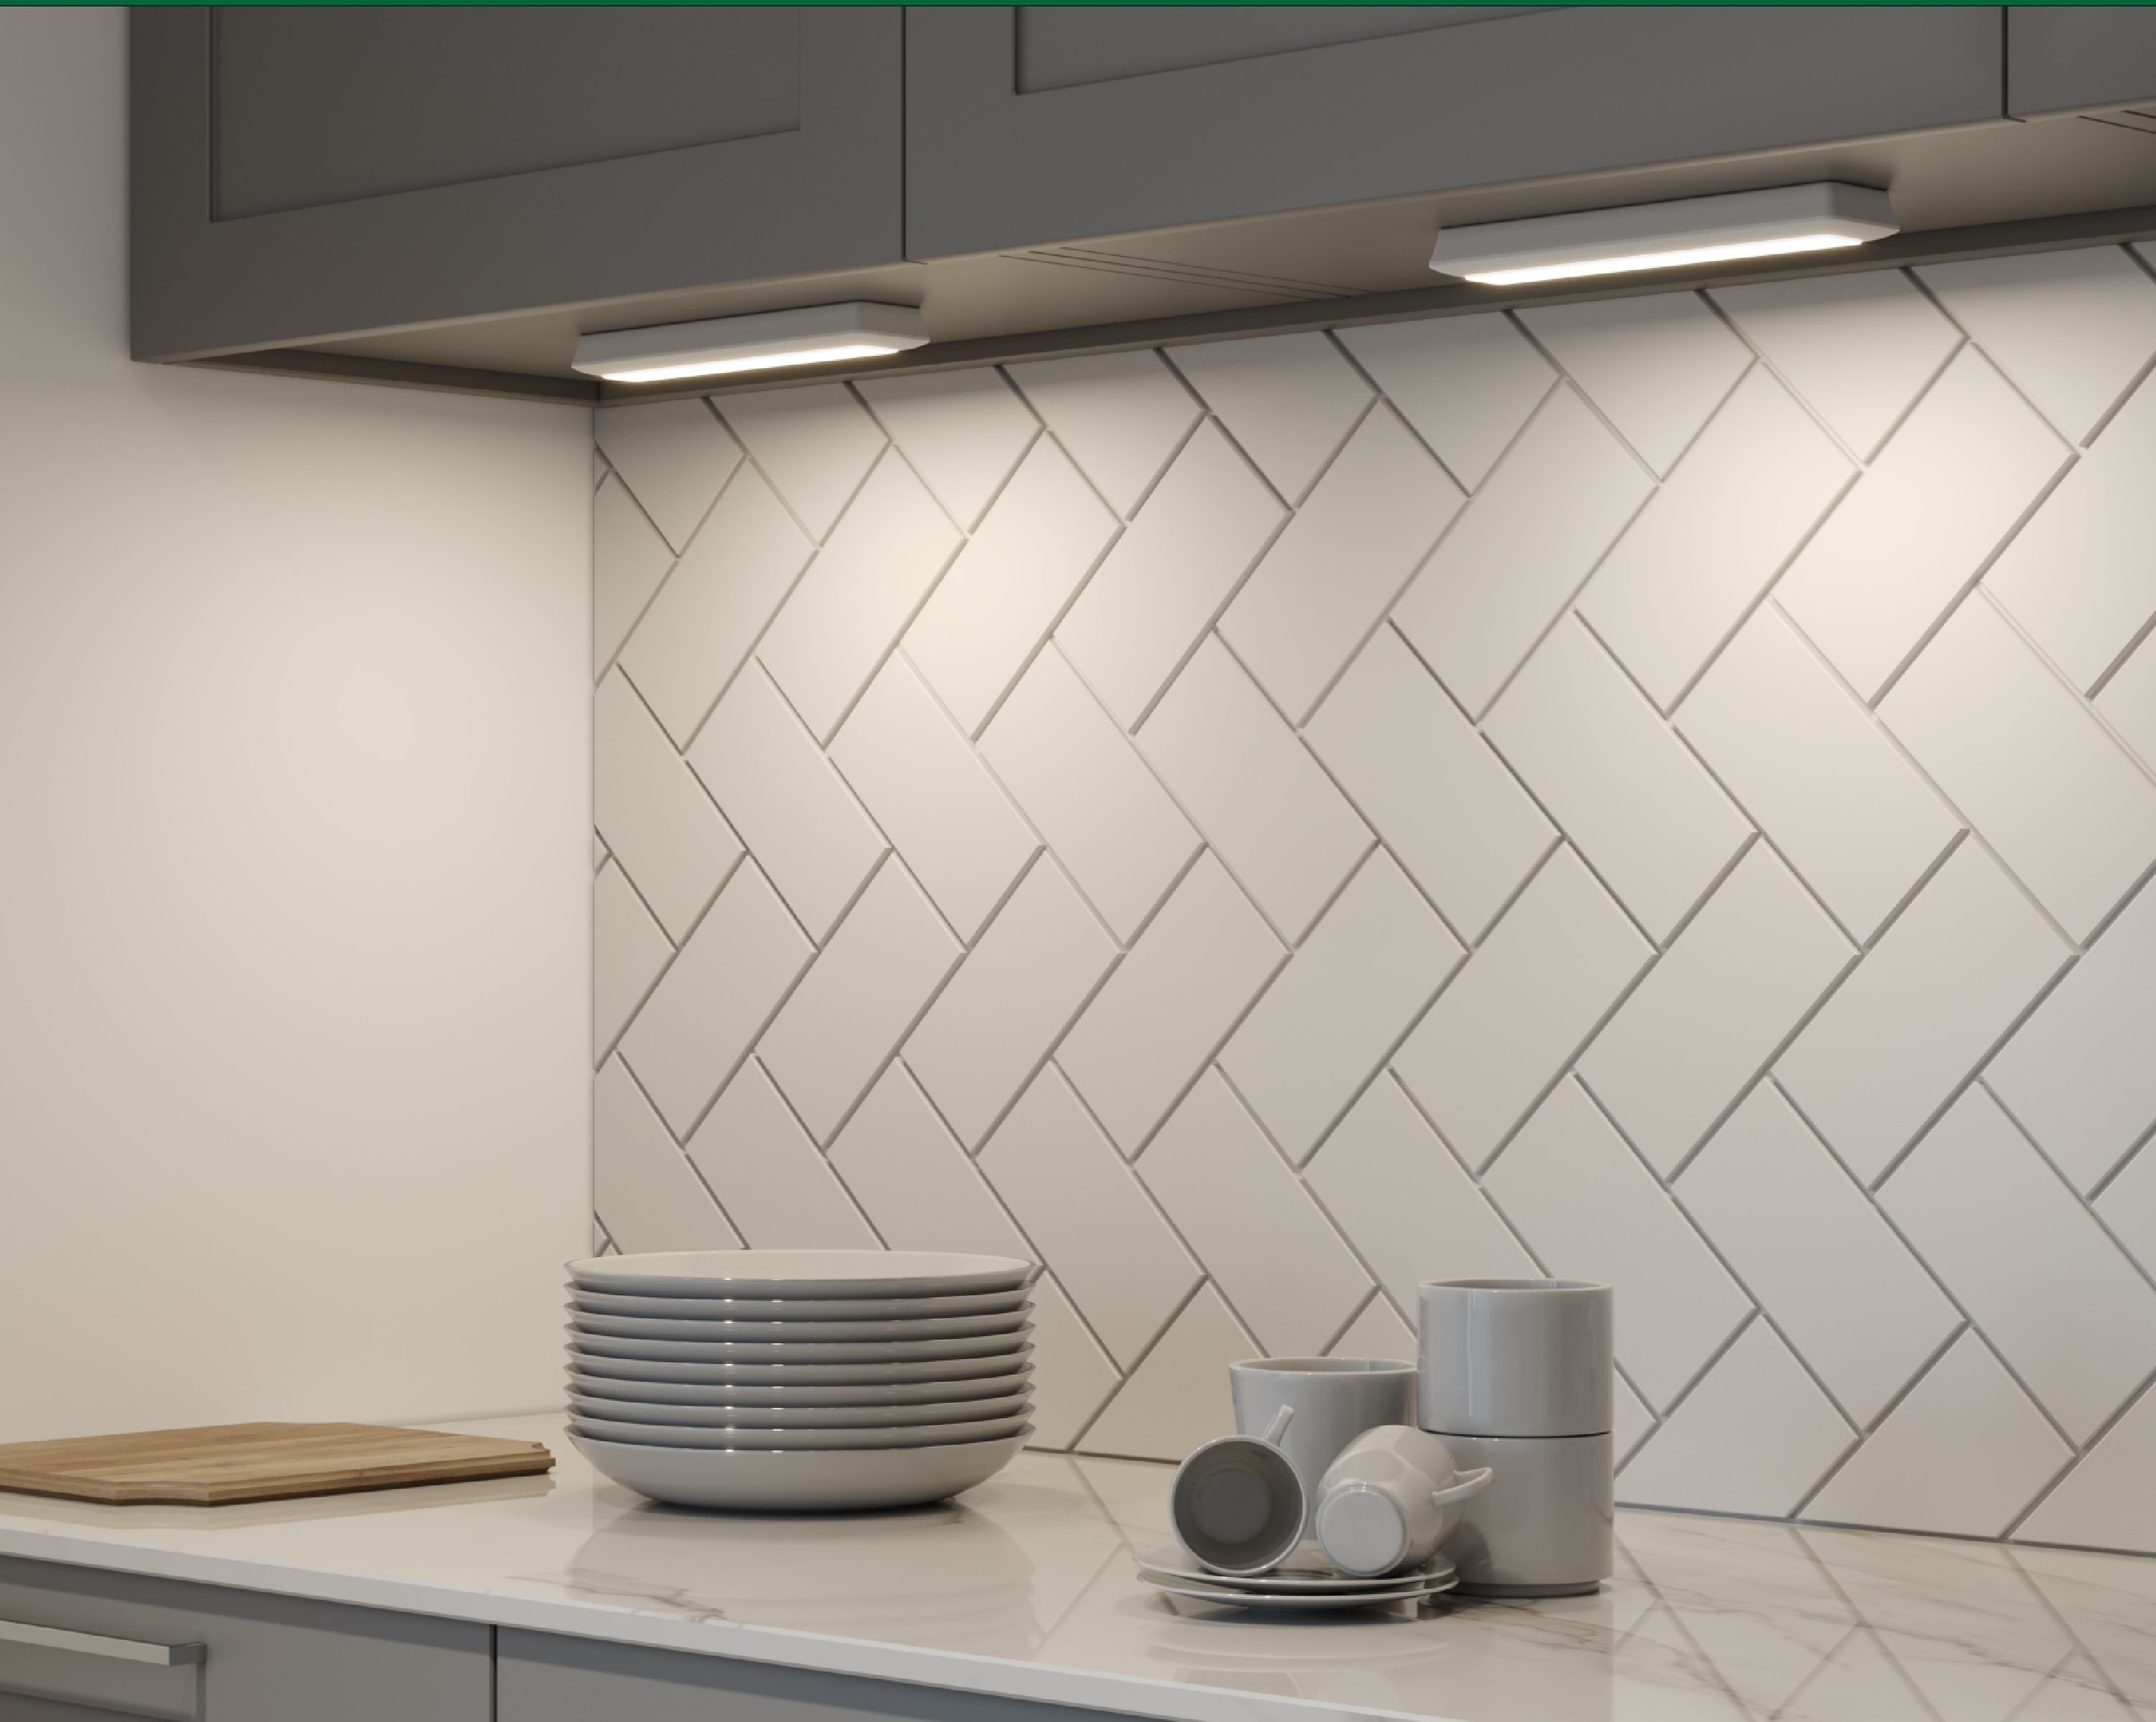 Cool White 2x 12" Light Bars Under Cabinet Kitchen Home Interior LED Lighting 